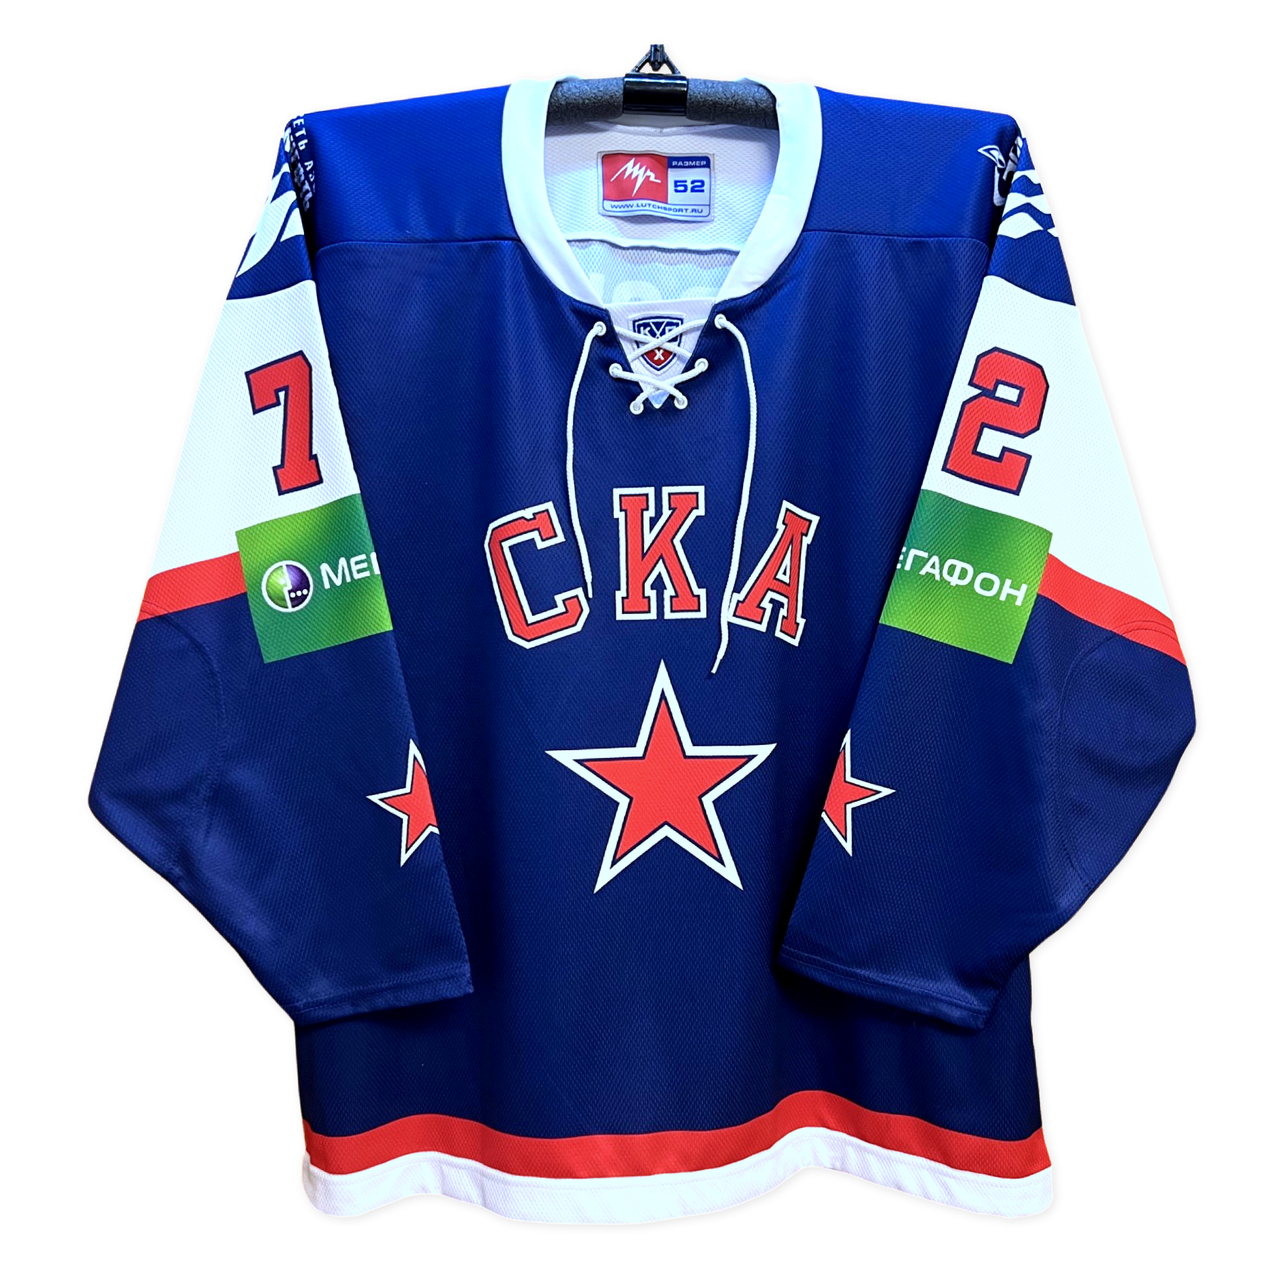 Ska Saint Petersburg Hockey Jerseys for sale cheap online